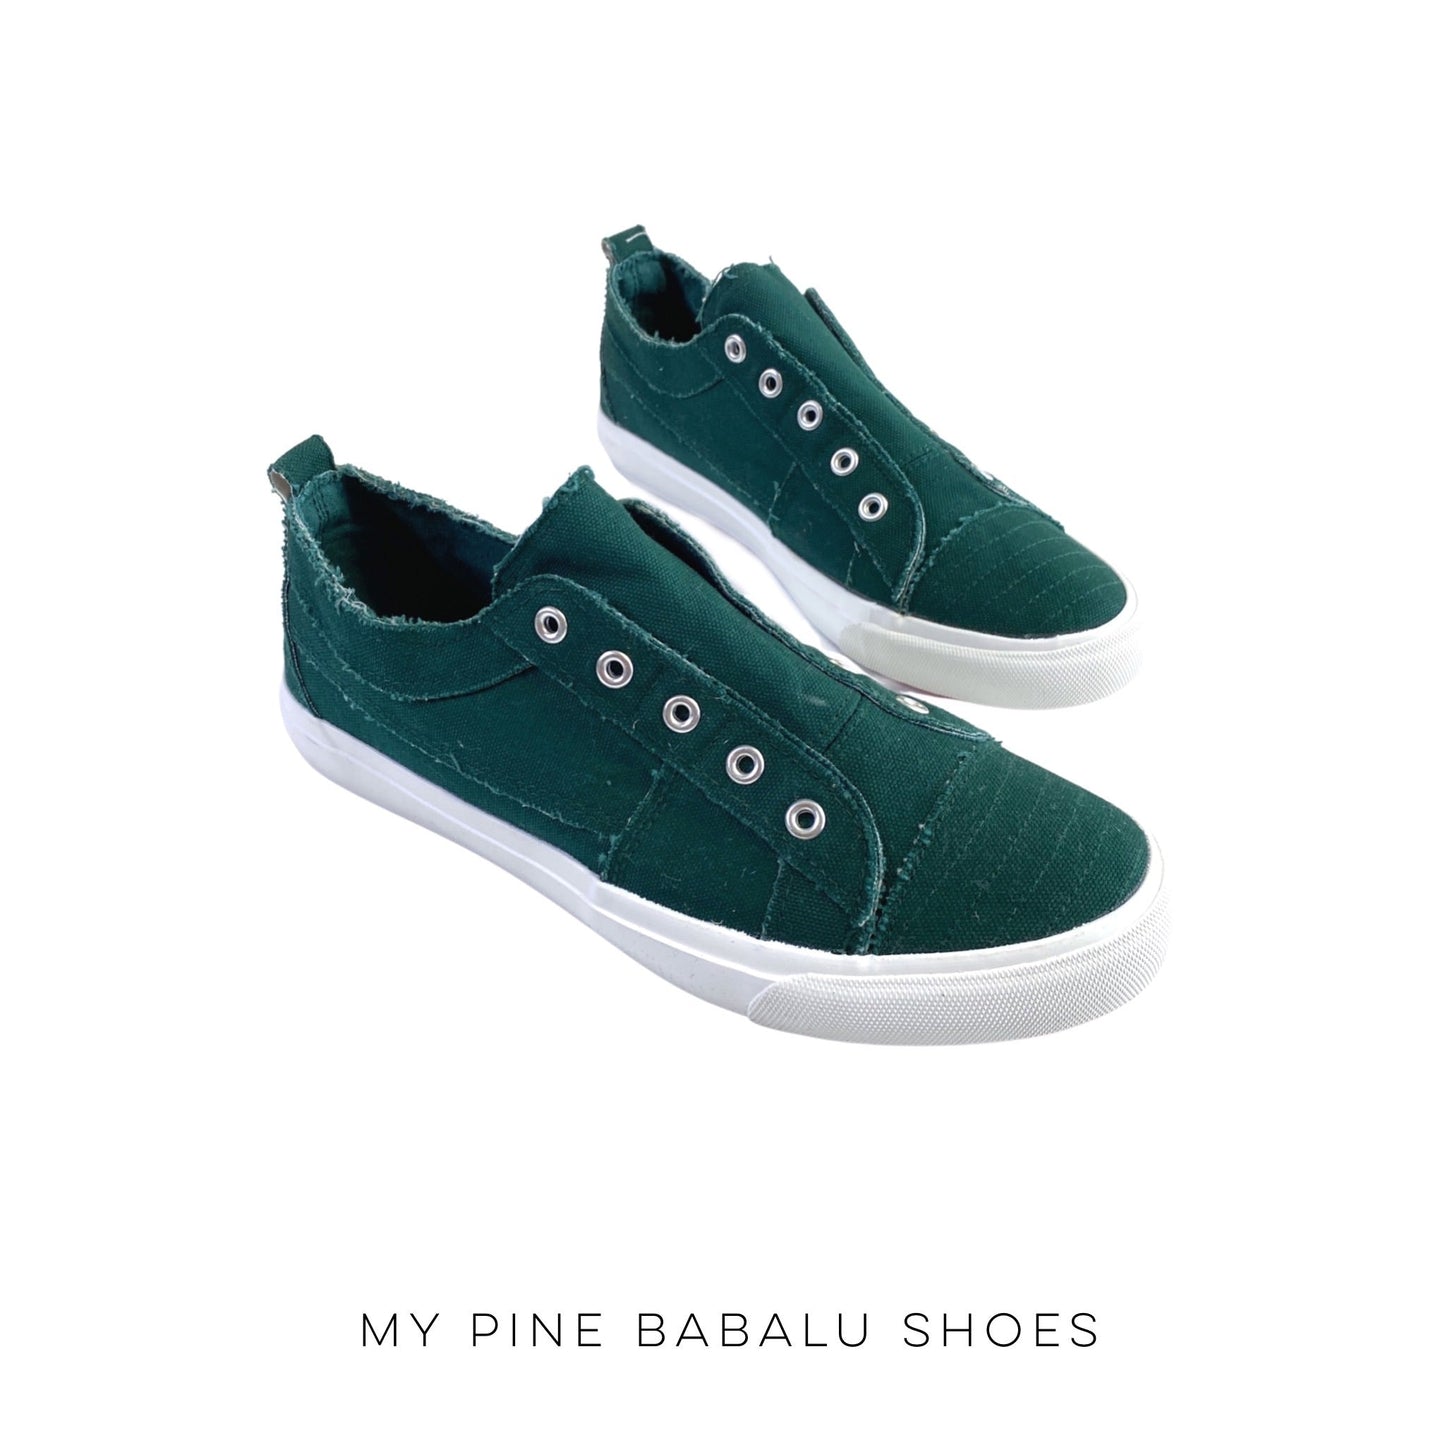 My Pine Babalu Shoes